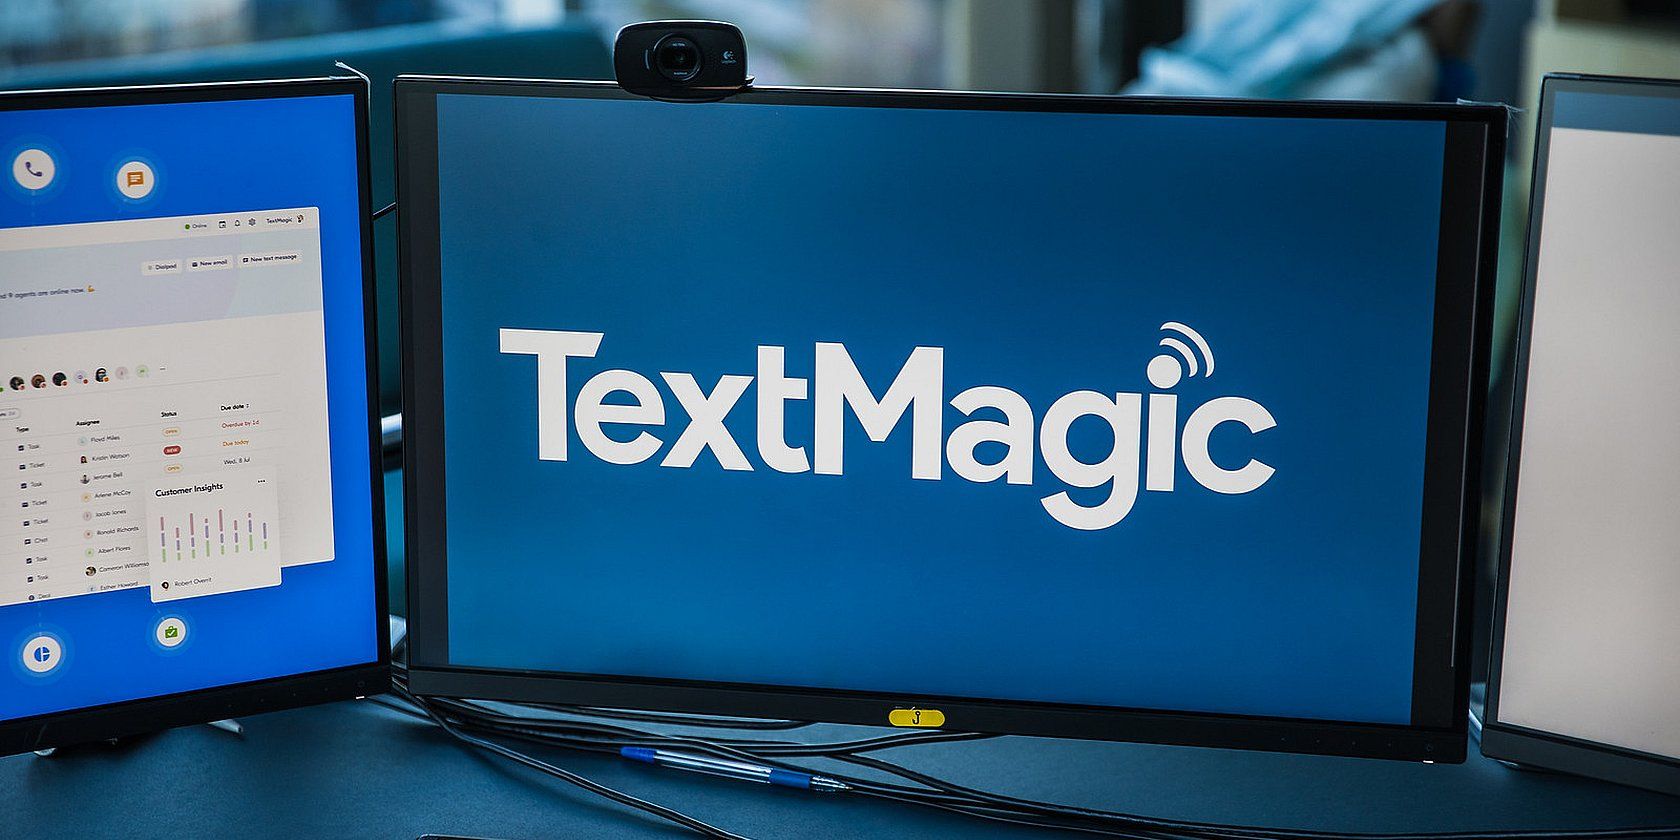 textmagic logo on monitor